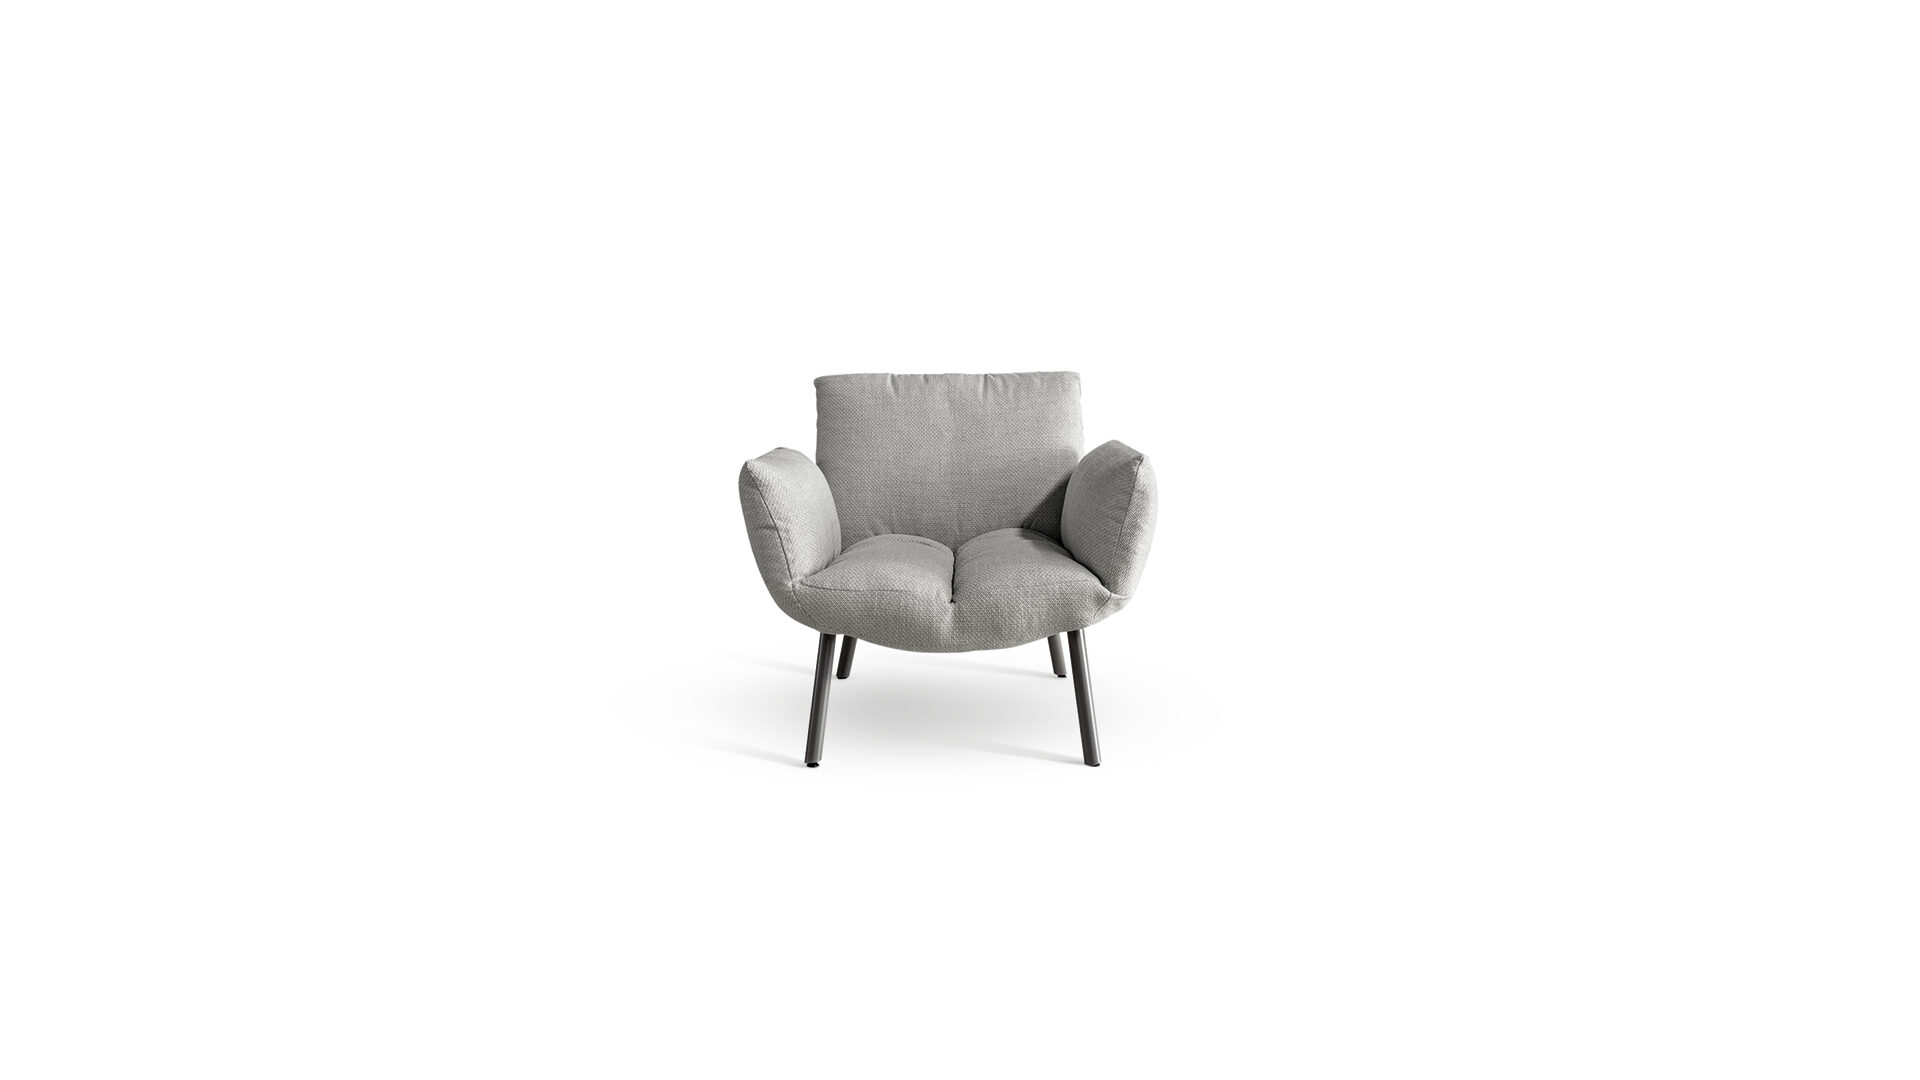 bonaldo-poltrone-pil-armchair-main-slider-2-1920x1080-jpg